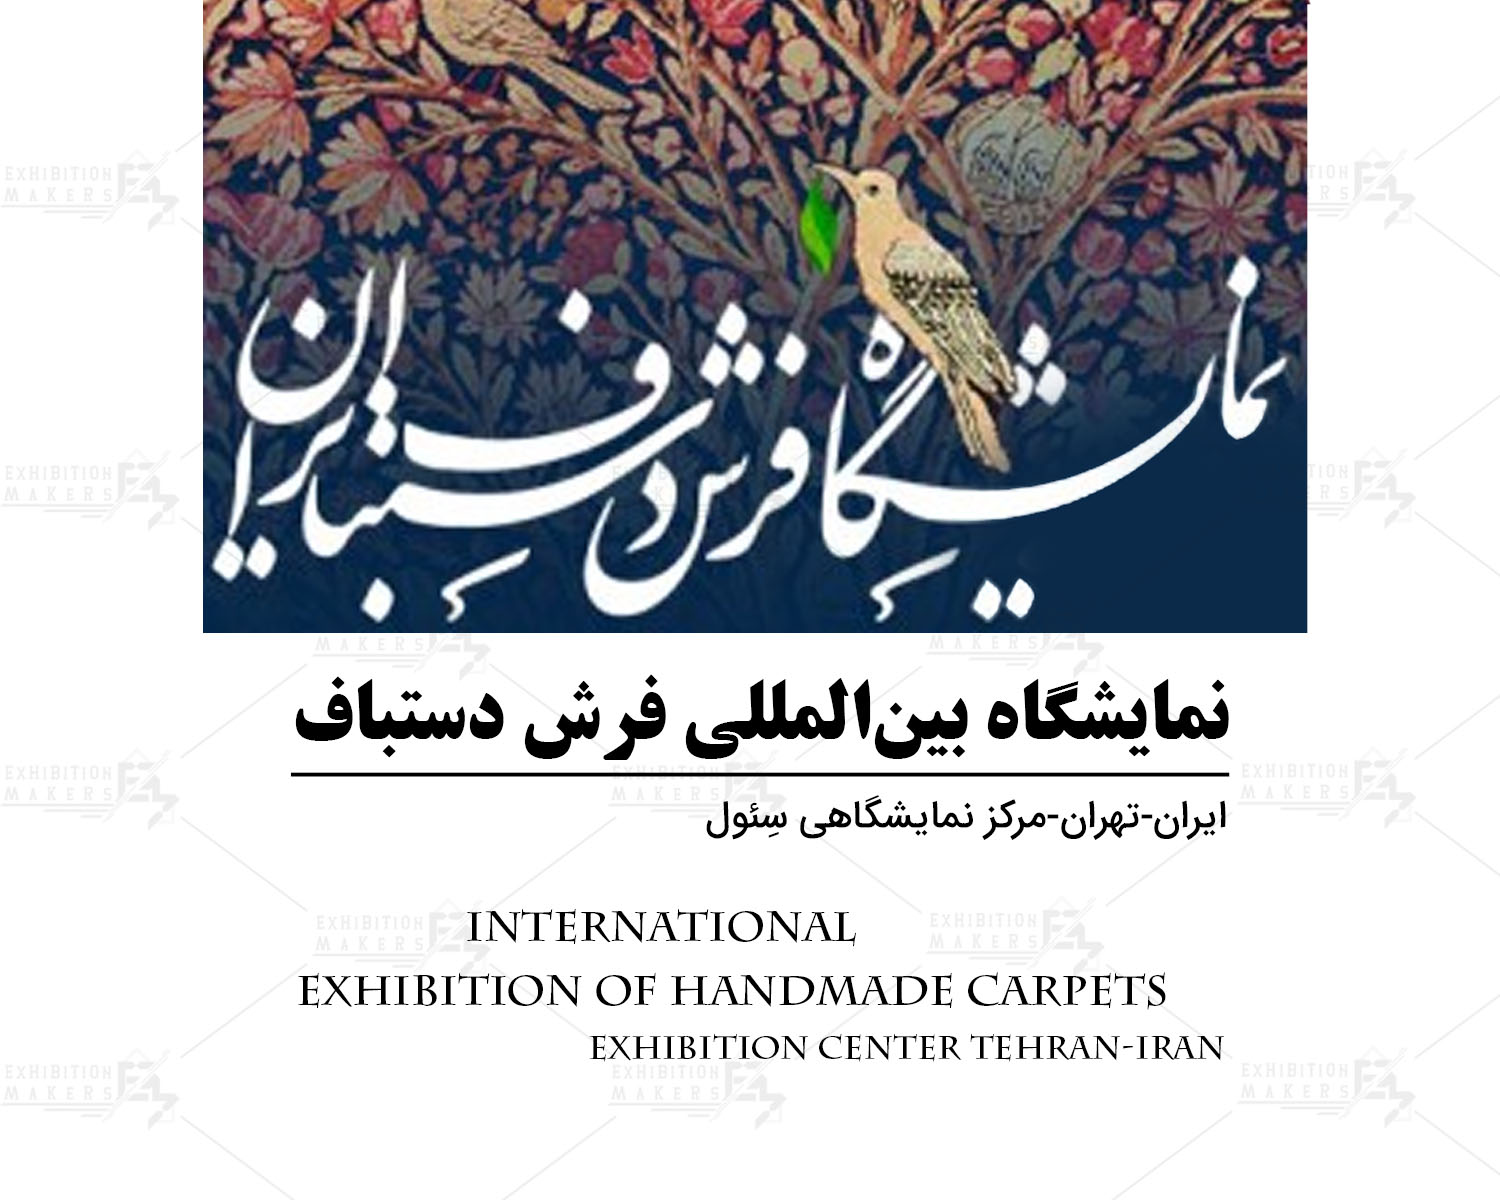 Exhibition of handmade carpets